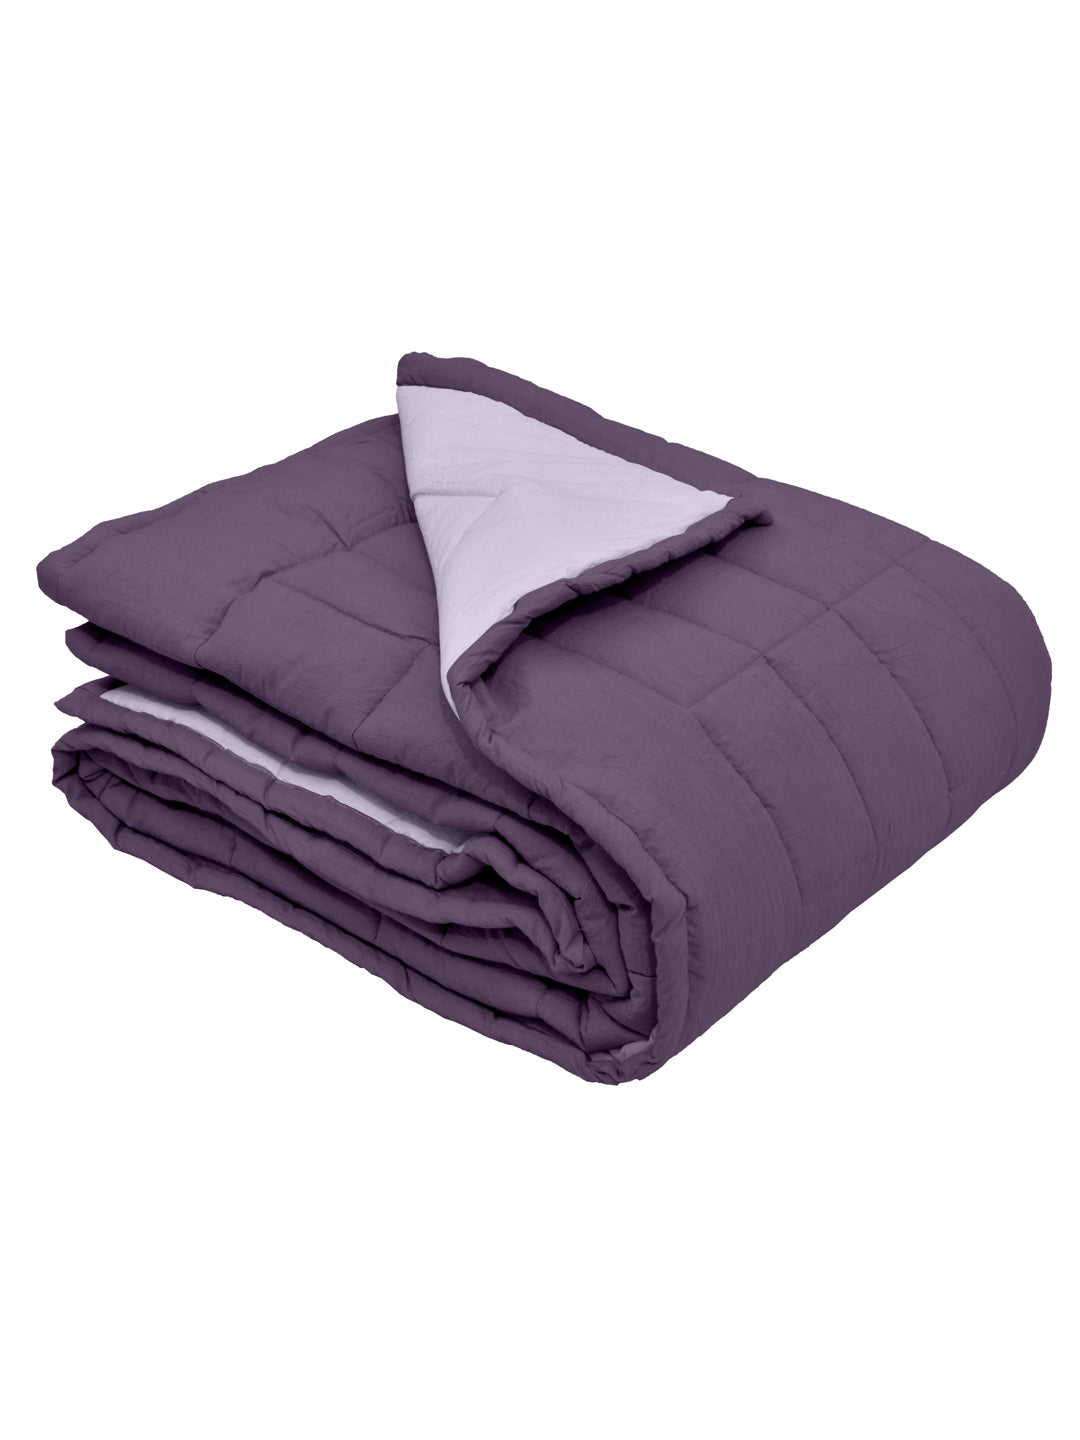 Vintage Violet & Lavender Fog Cambric Cotton Reversible Dohar - Double